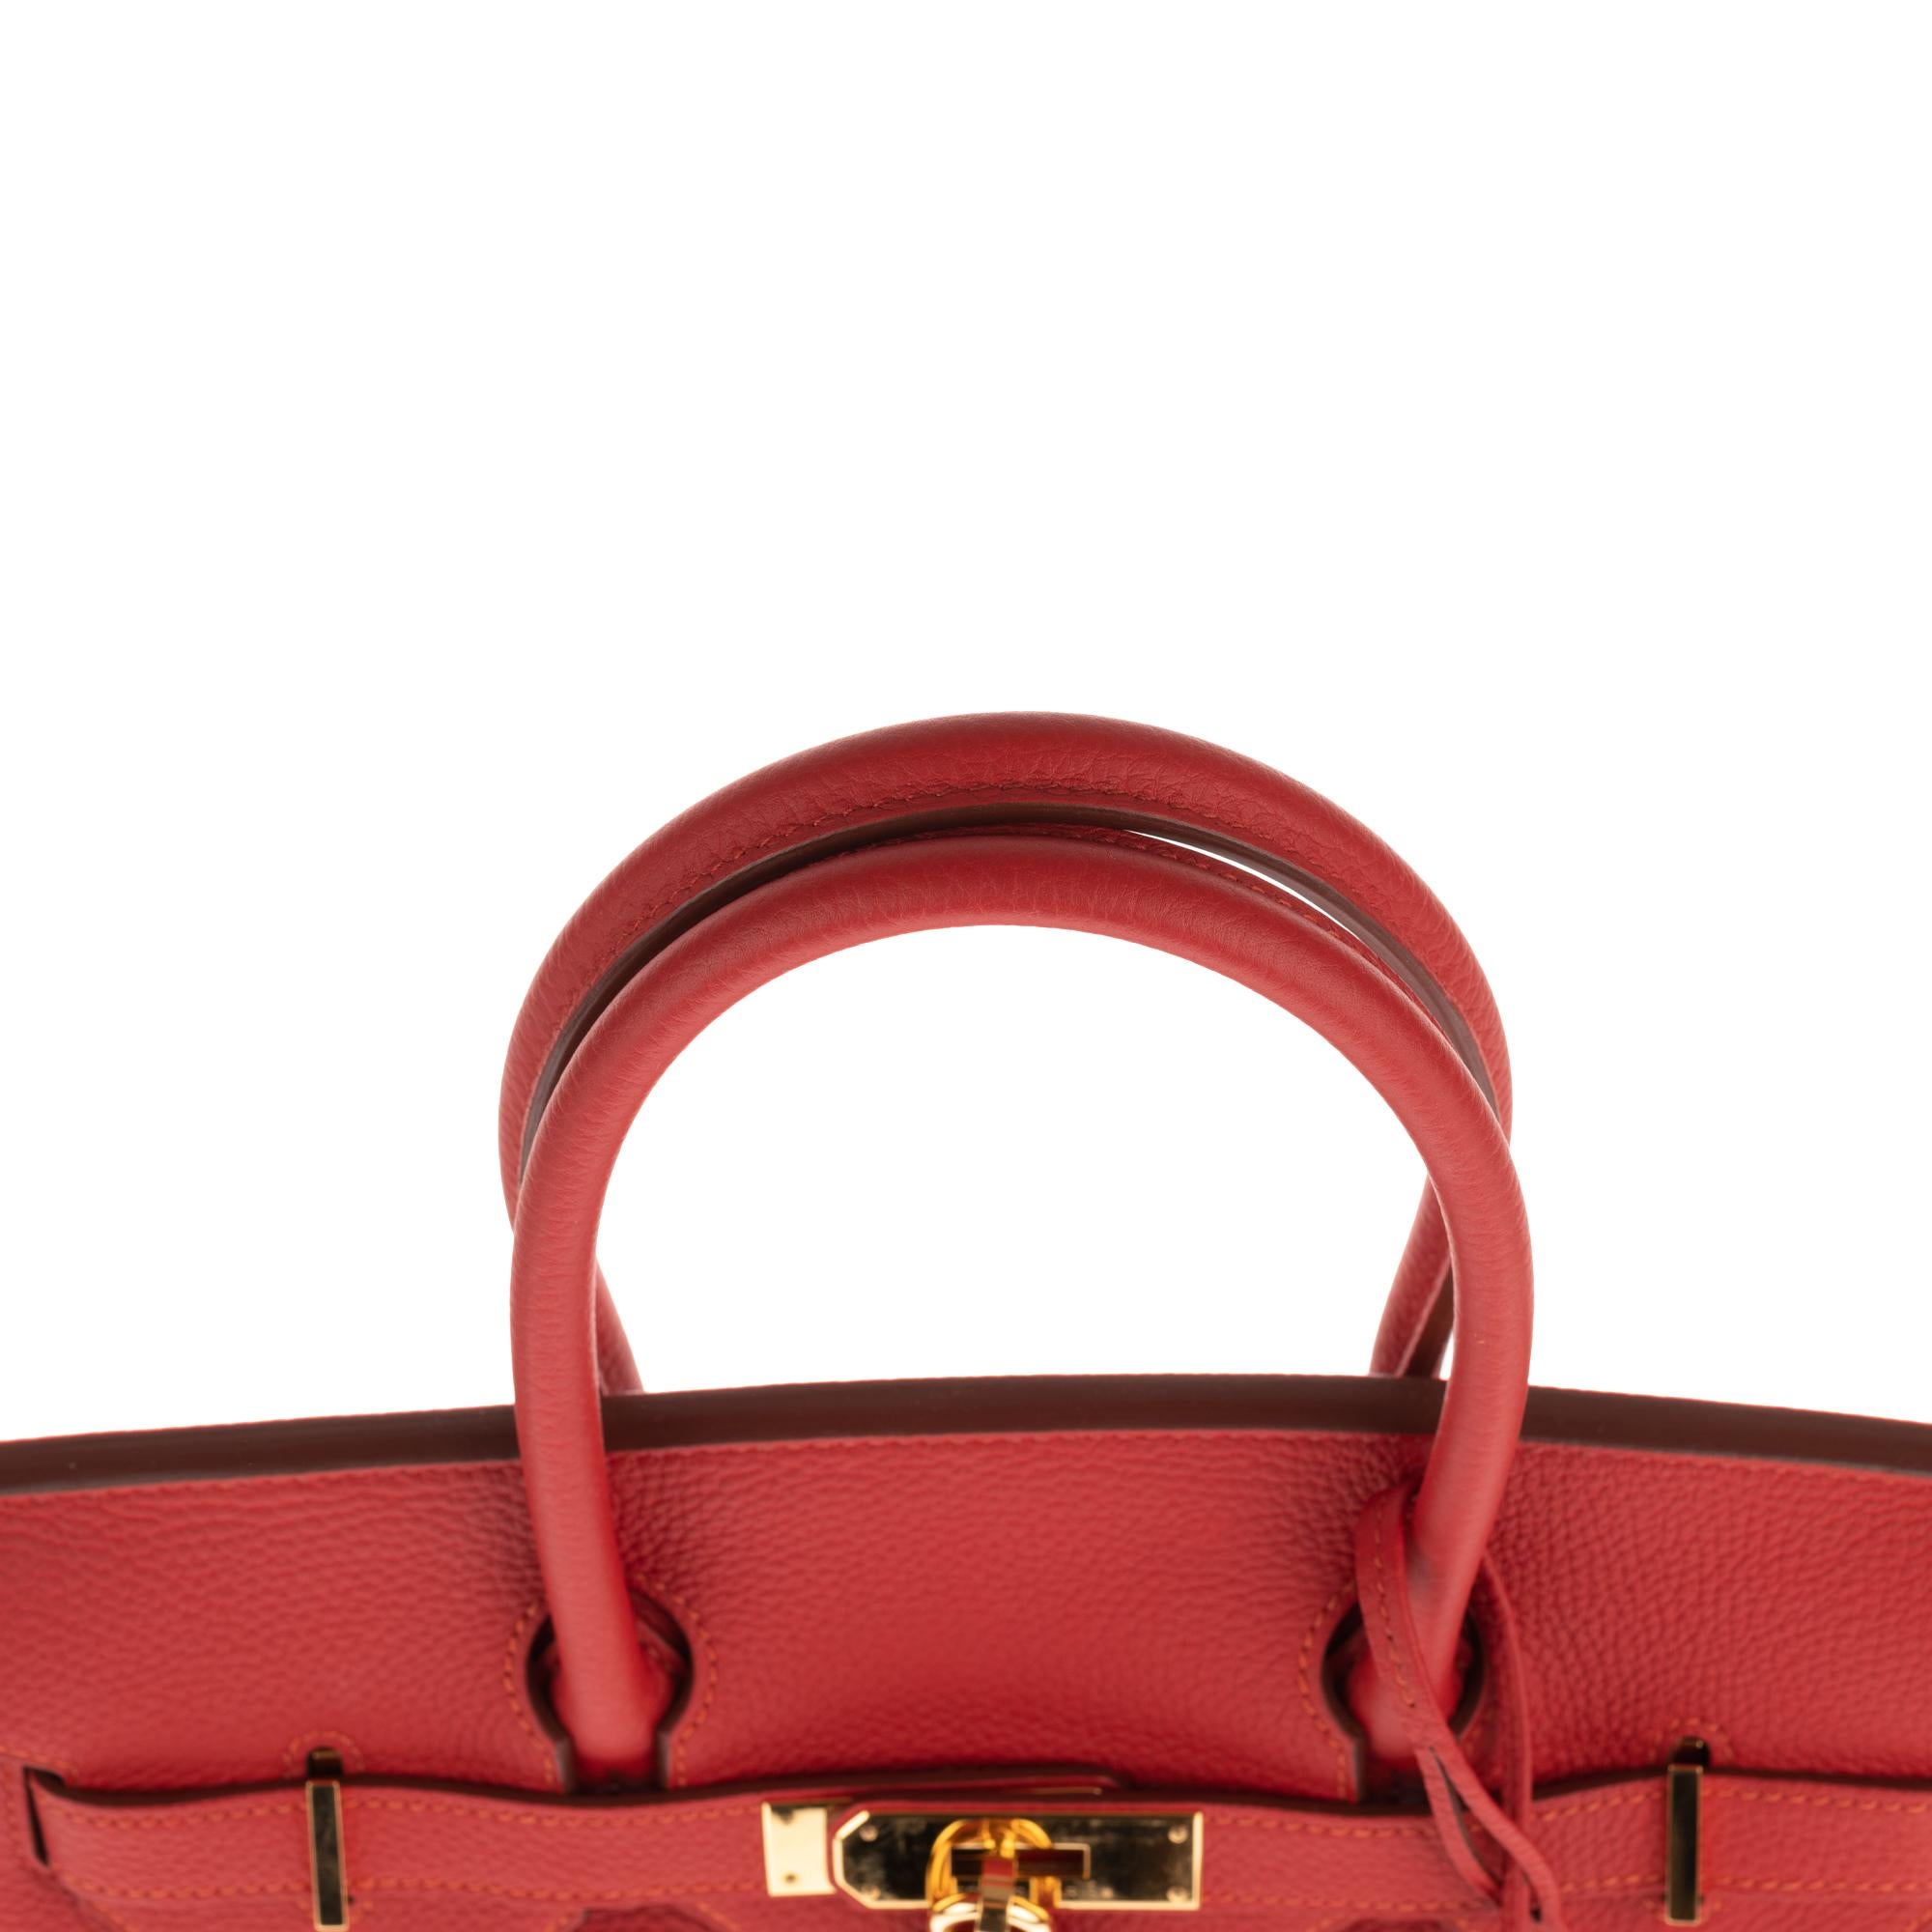 Beautiful Hermès Birkin 30 handbag in Red Togo leather, gold hardware  2